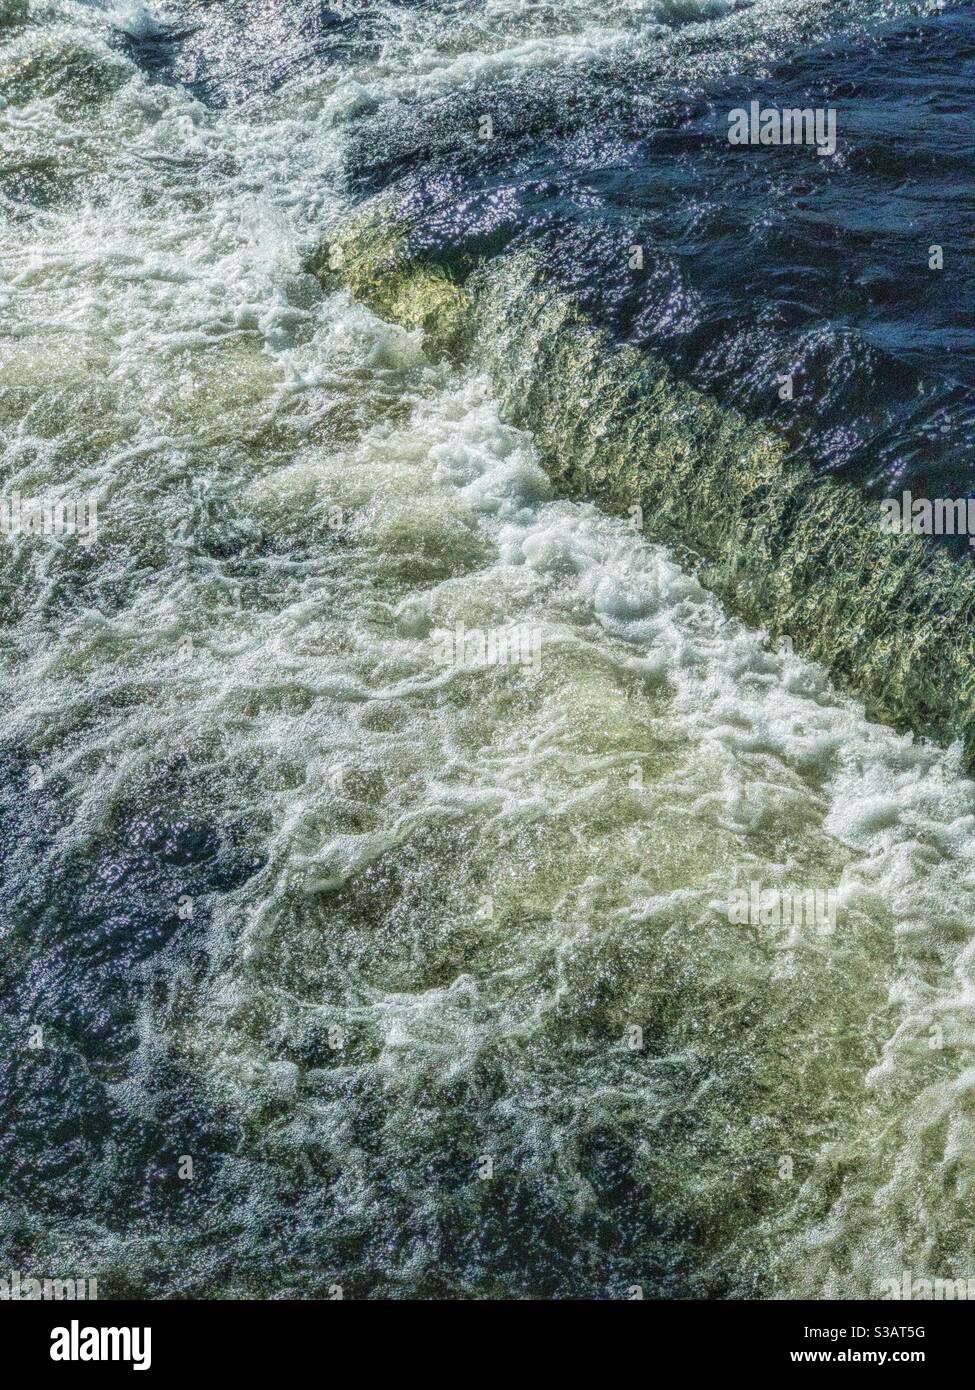 Acqua turbolenta a wir di fiume. Foto Stock